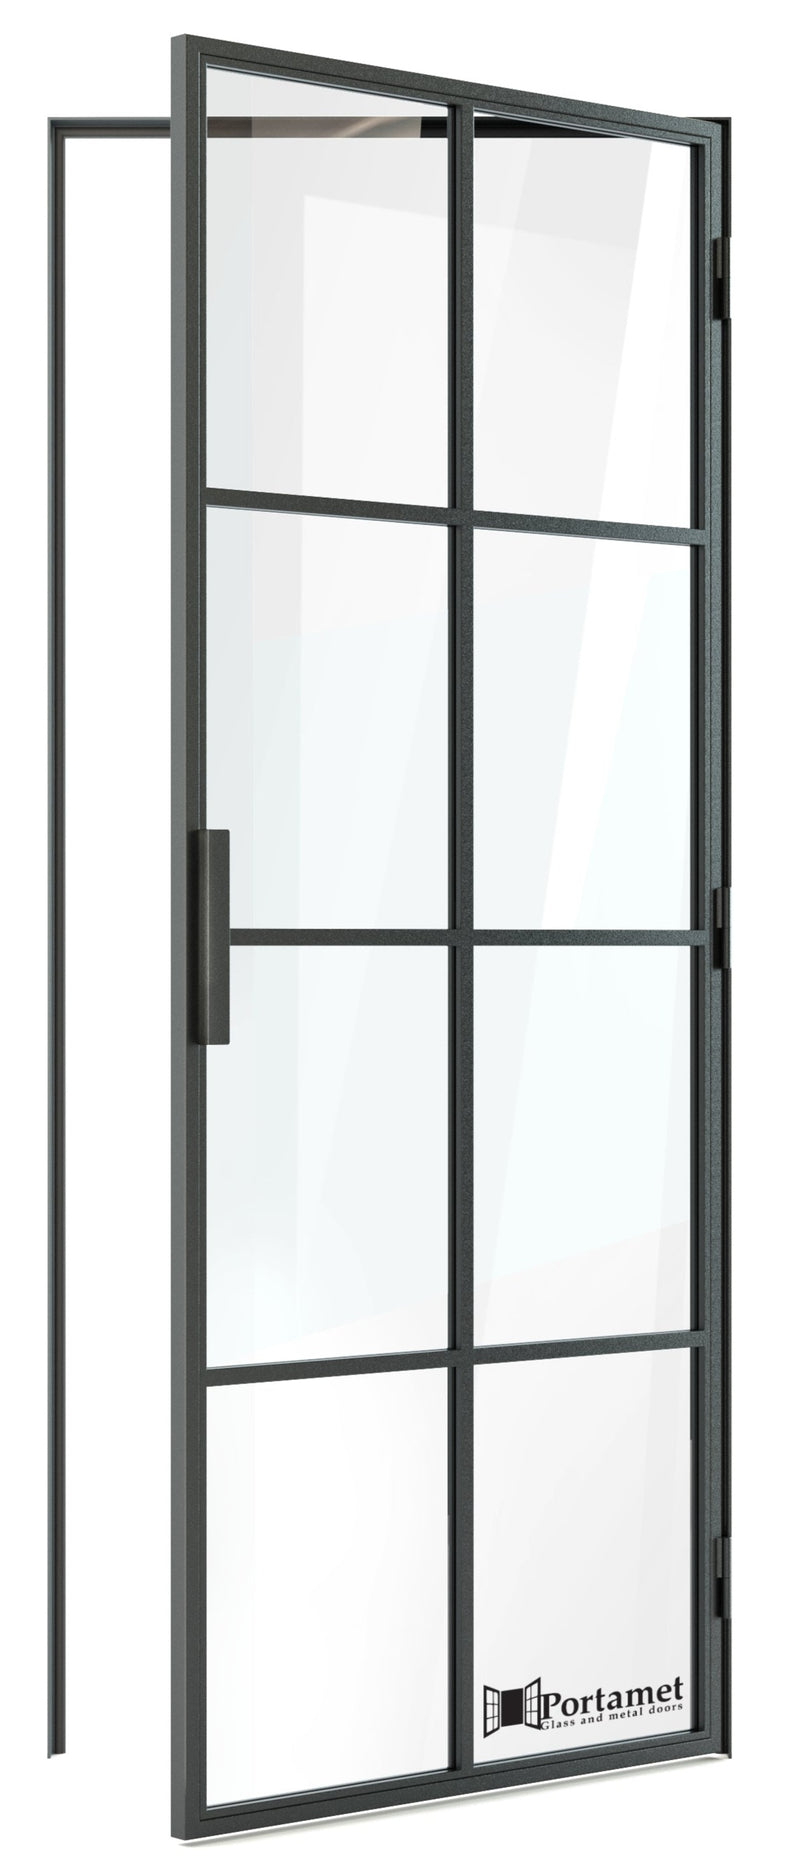 Portamet by Sfarzo - Oslo Classic Single Glazed Steel Hinged Door with Frame